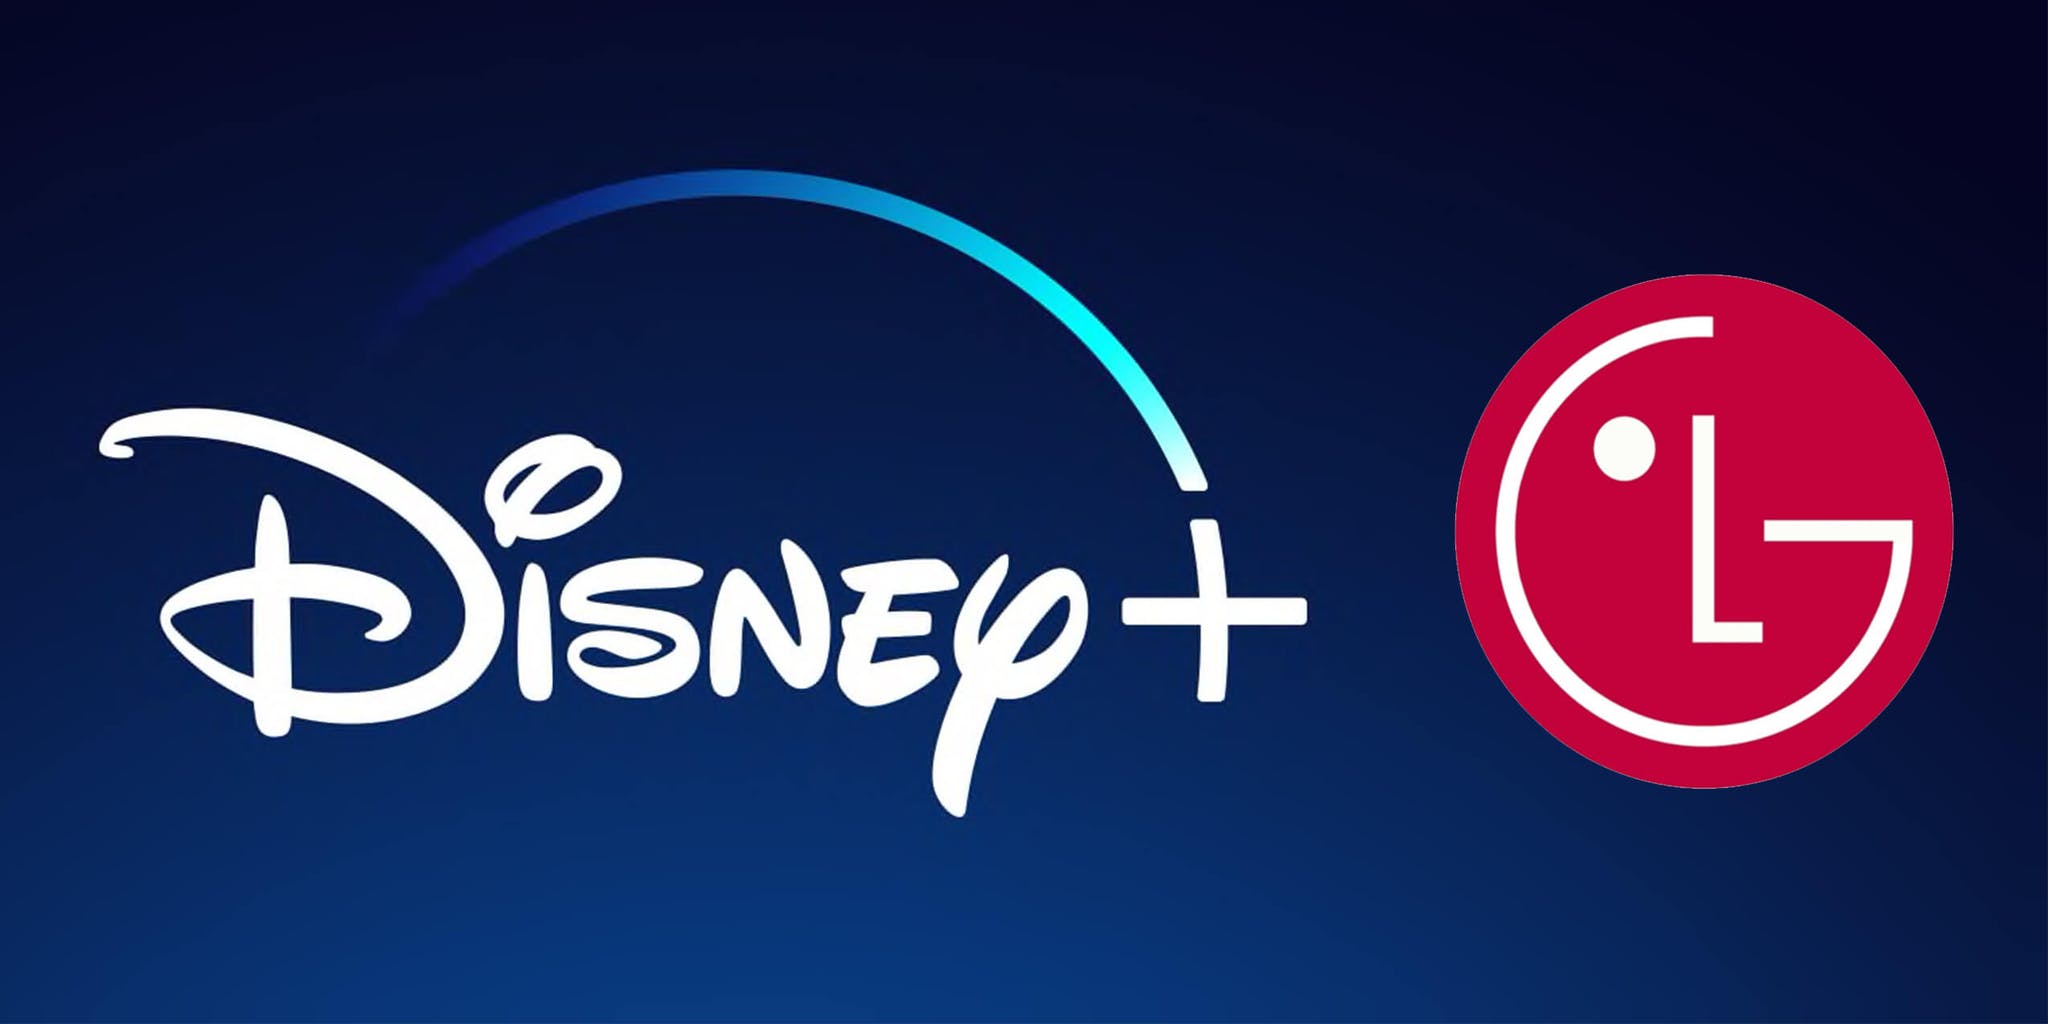 Disney Plus LG Smart TV Streaming: How to Watch Disney Plus